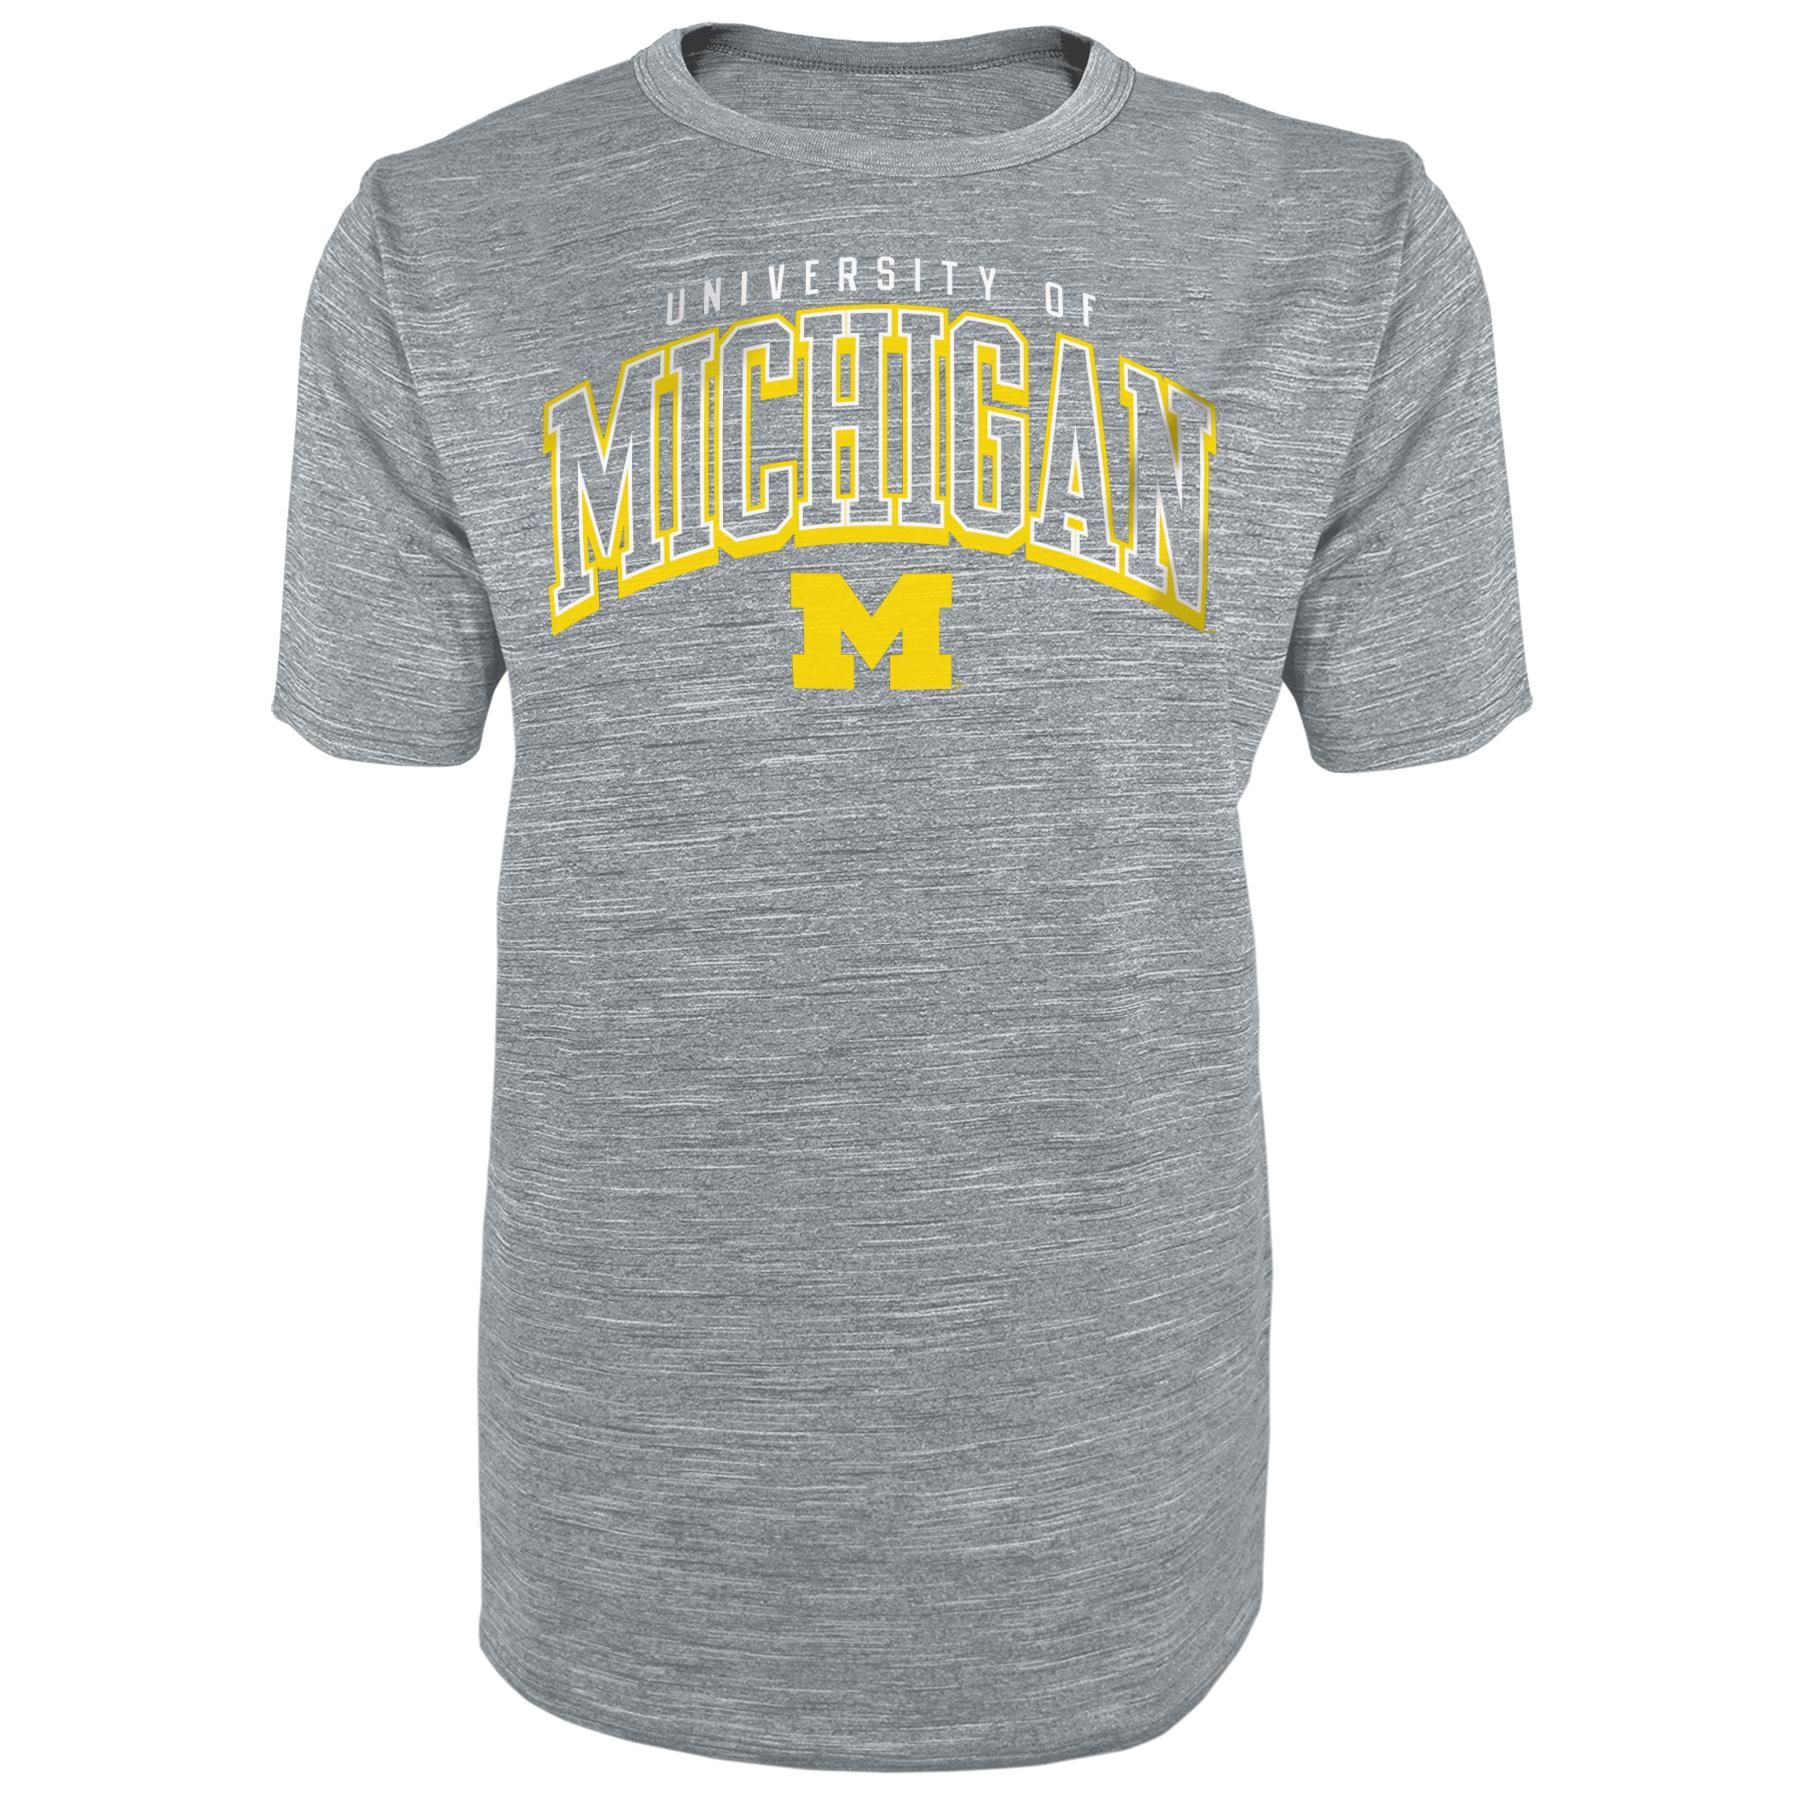 NCAA Men's Big & Tall Graphic T-Shirt - Michigan Wolverines | Kmart